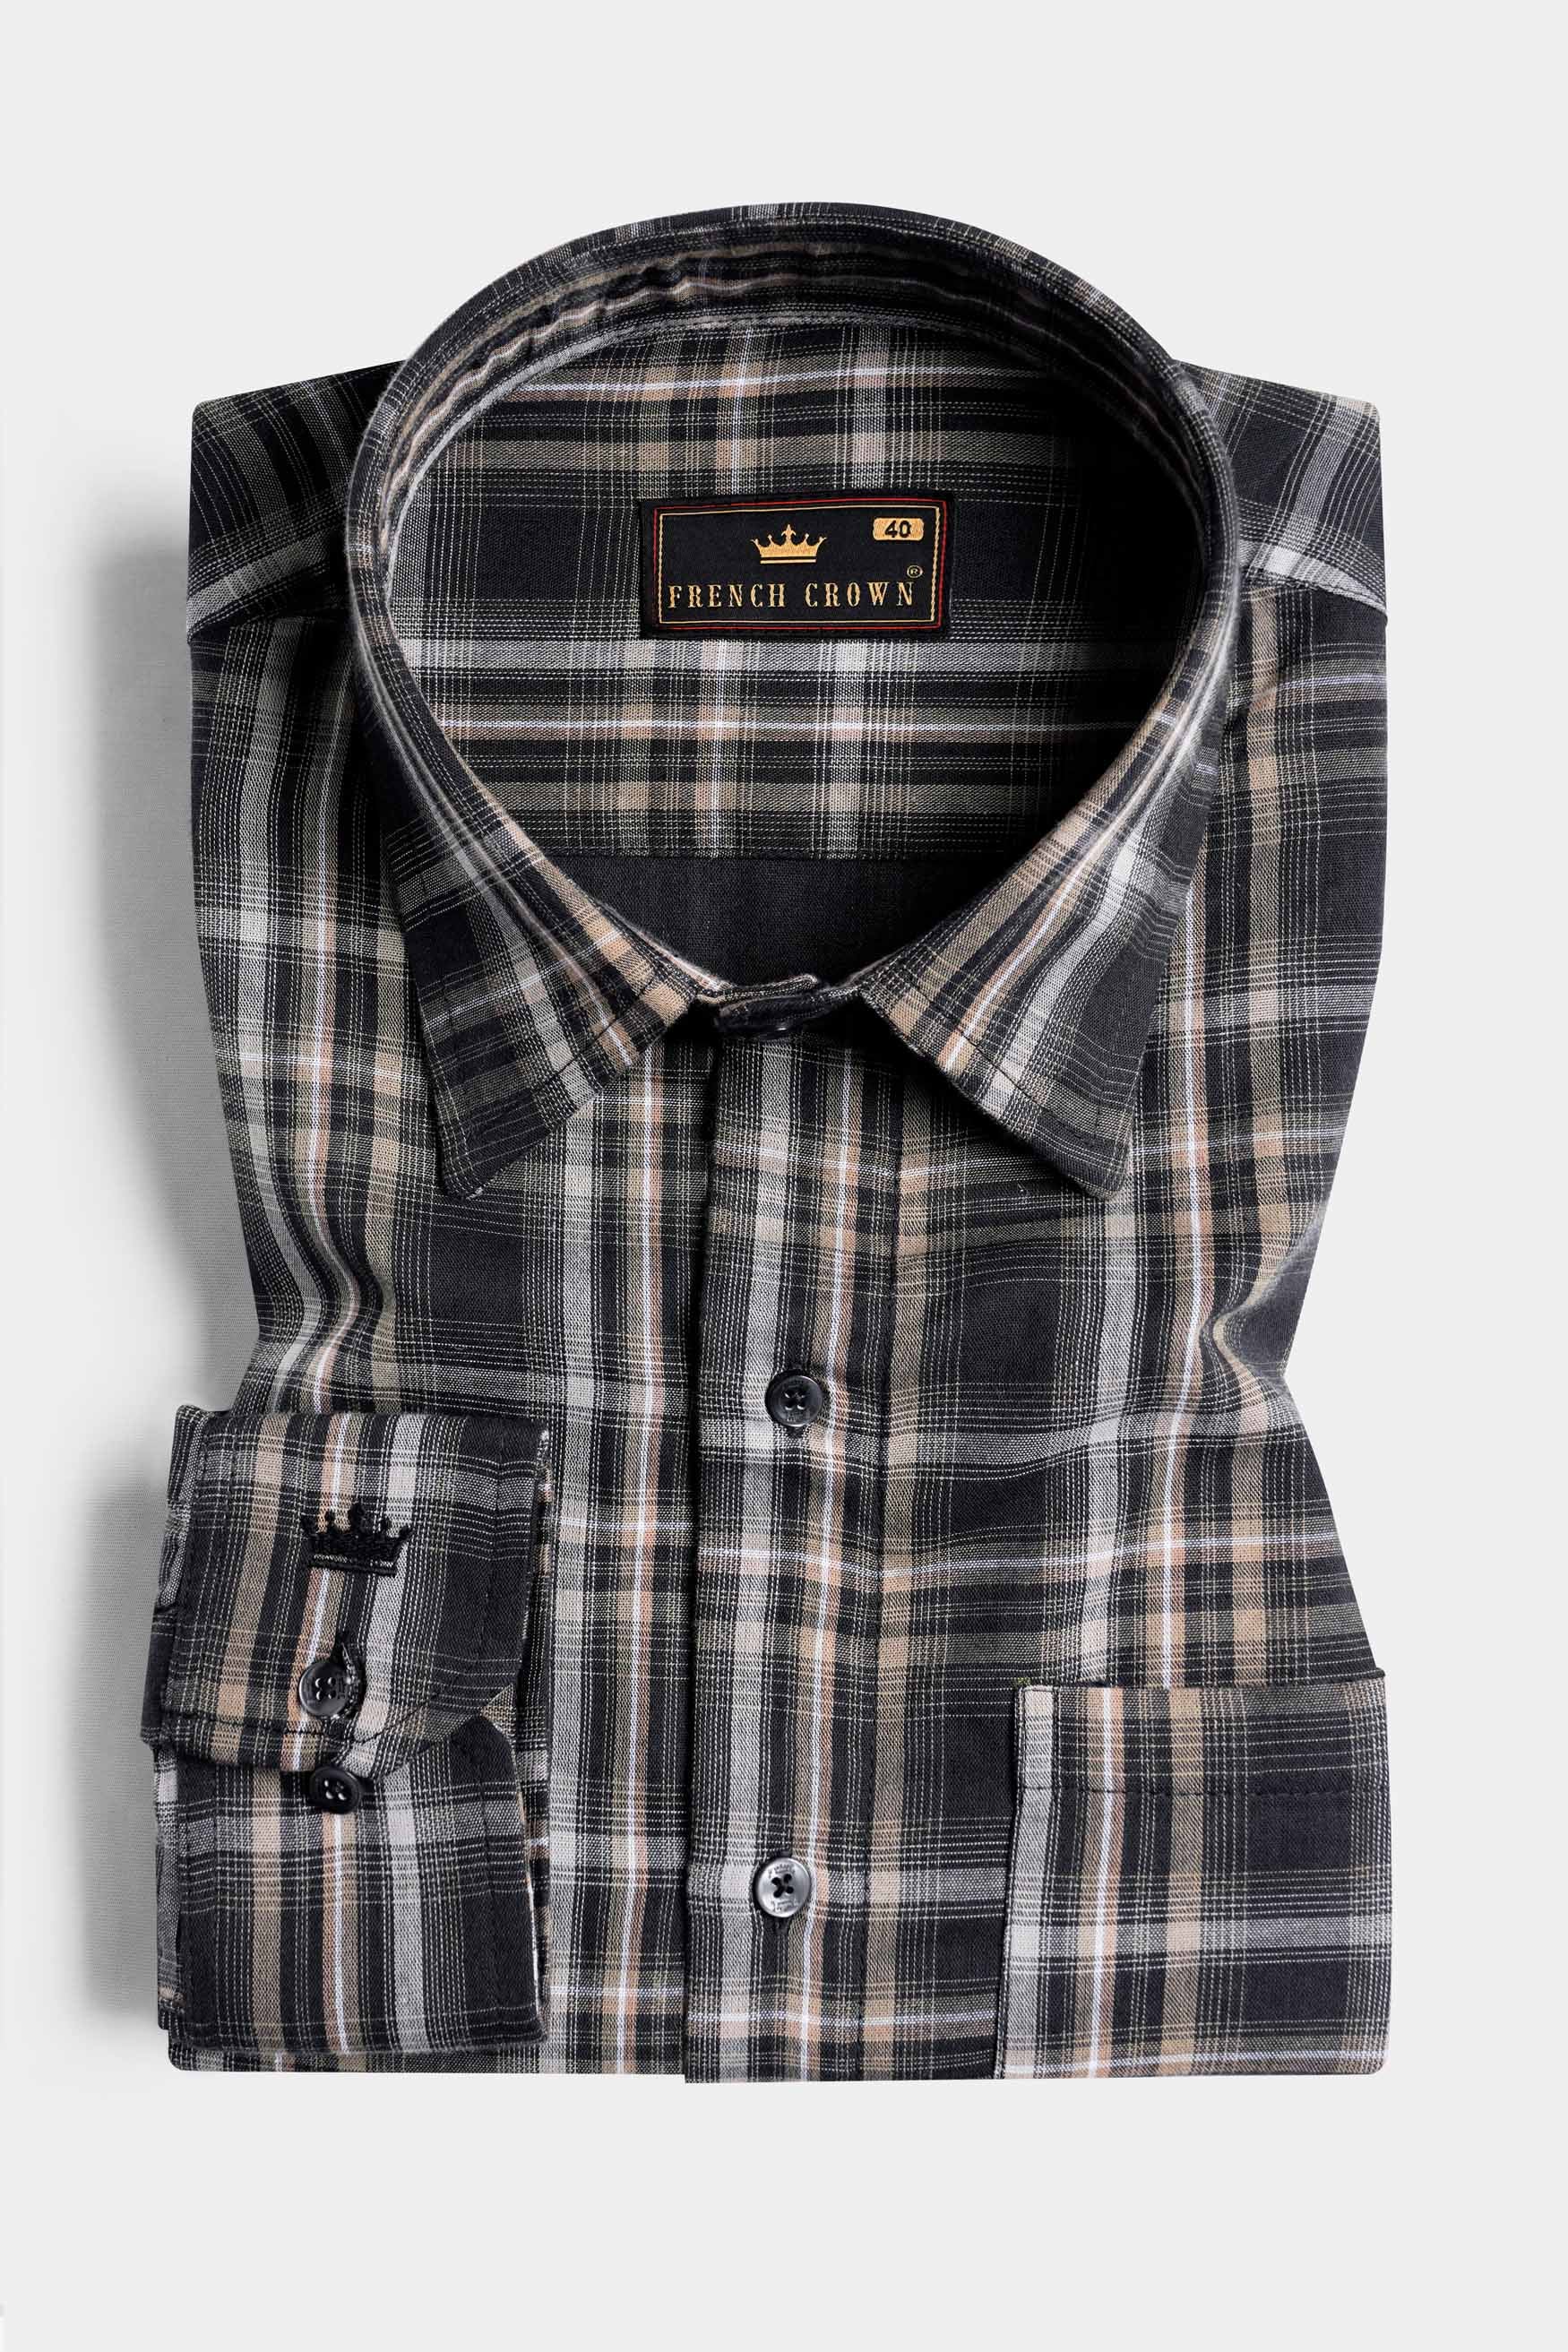 Jade Black and Flint Brown Twill Plaid Premium Cotton Shirt